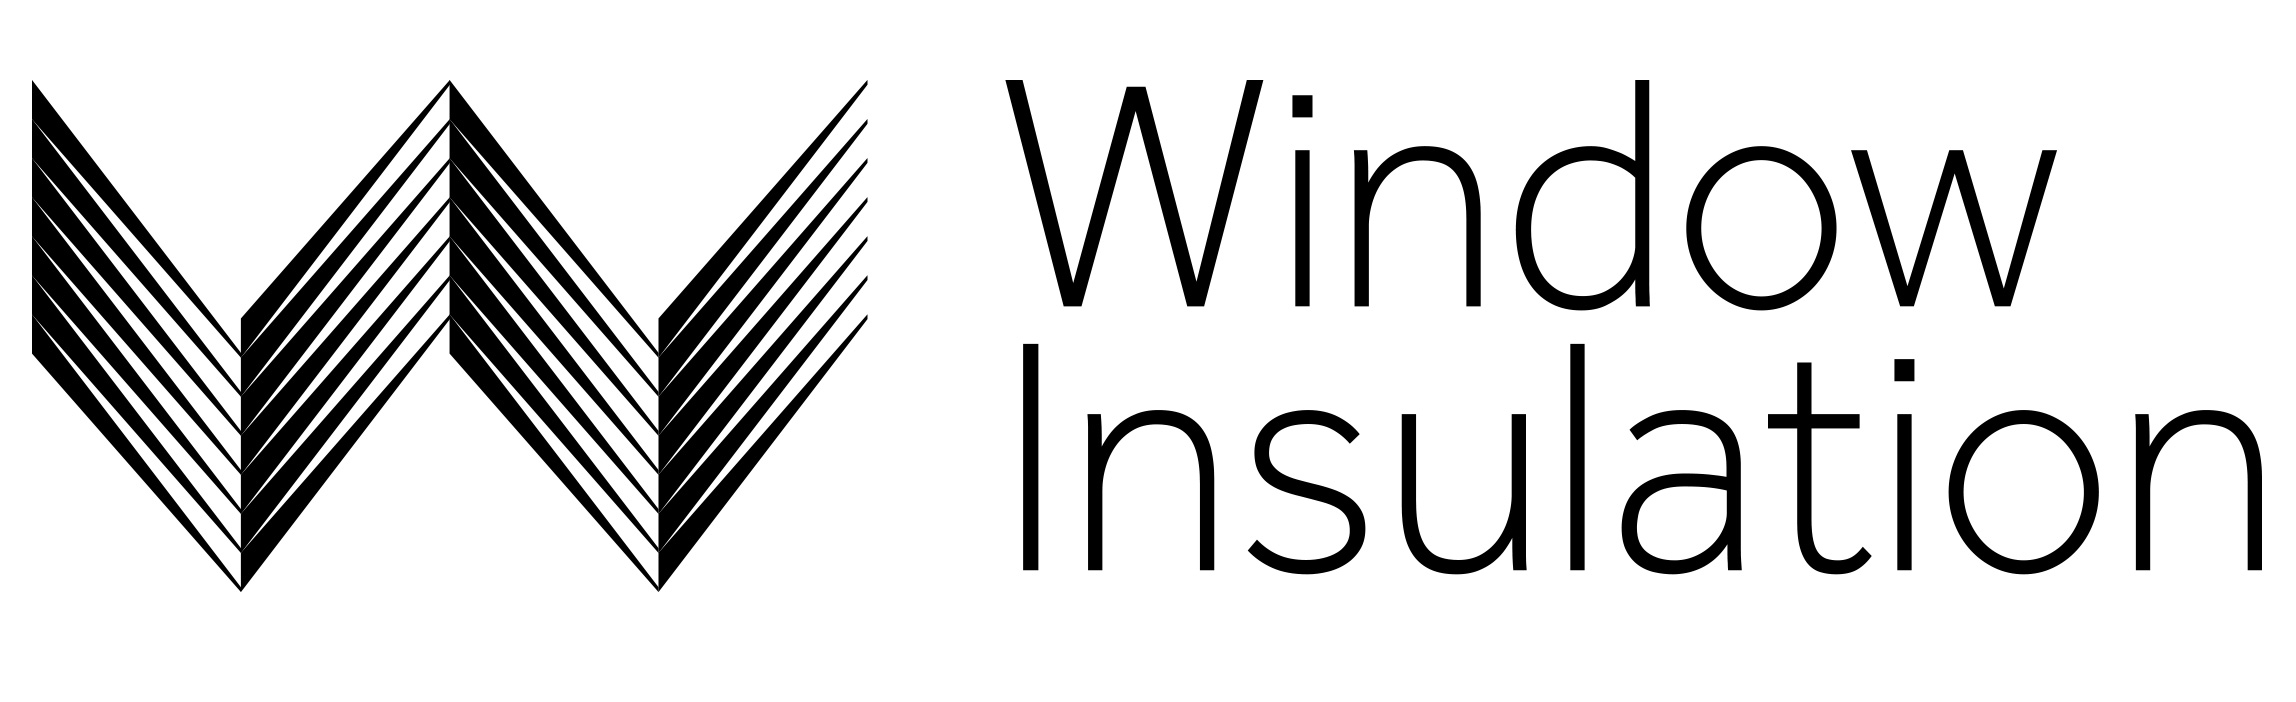 Window Insulation logo diagonal lines in shape of W logo lockup